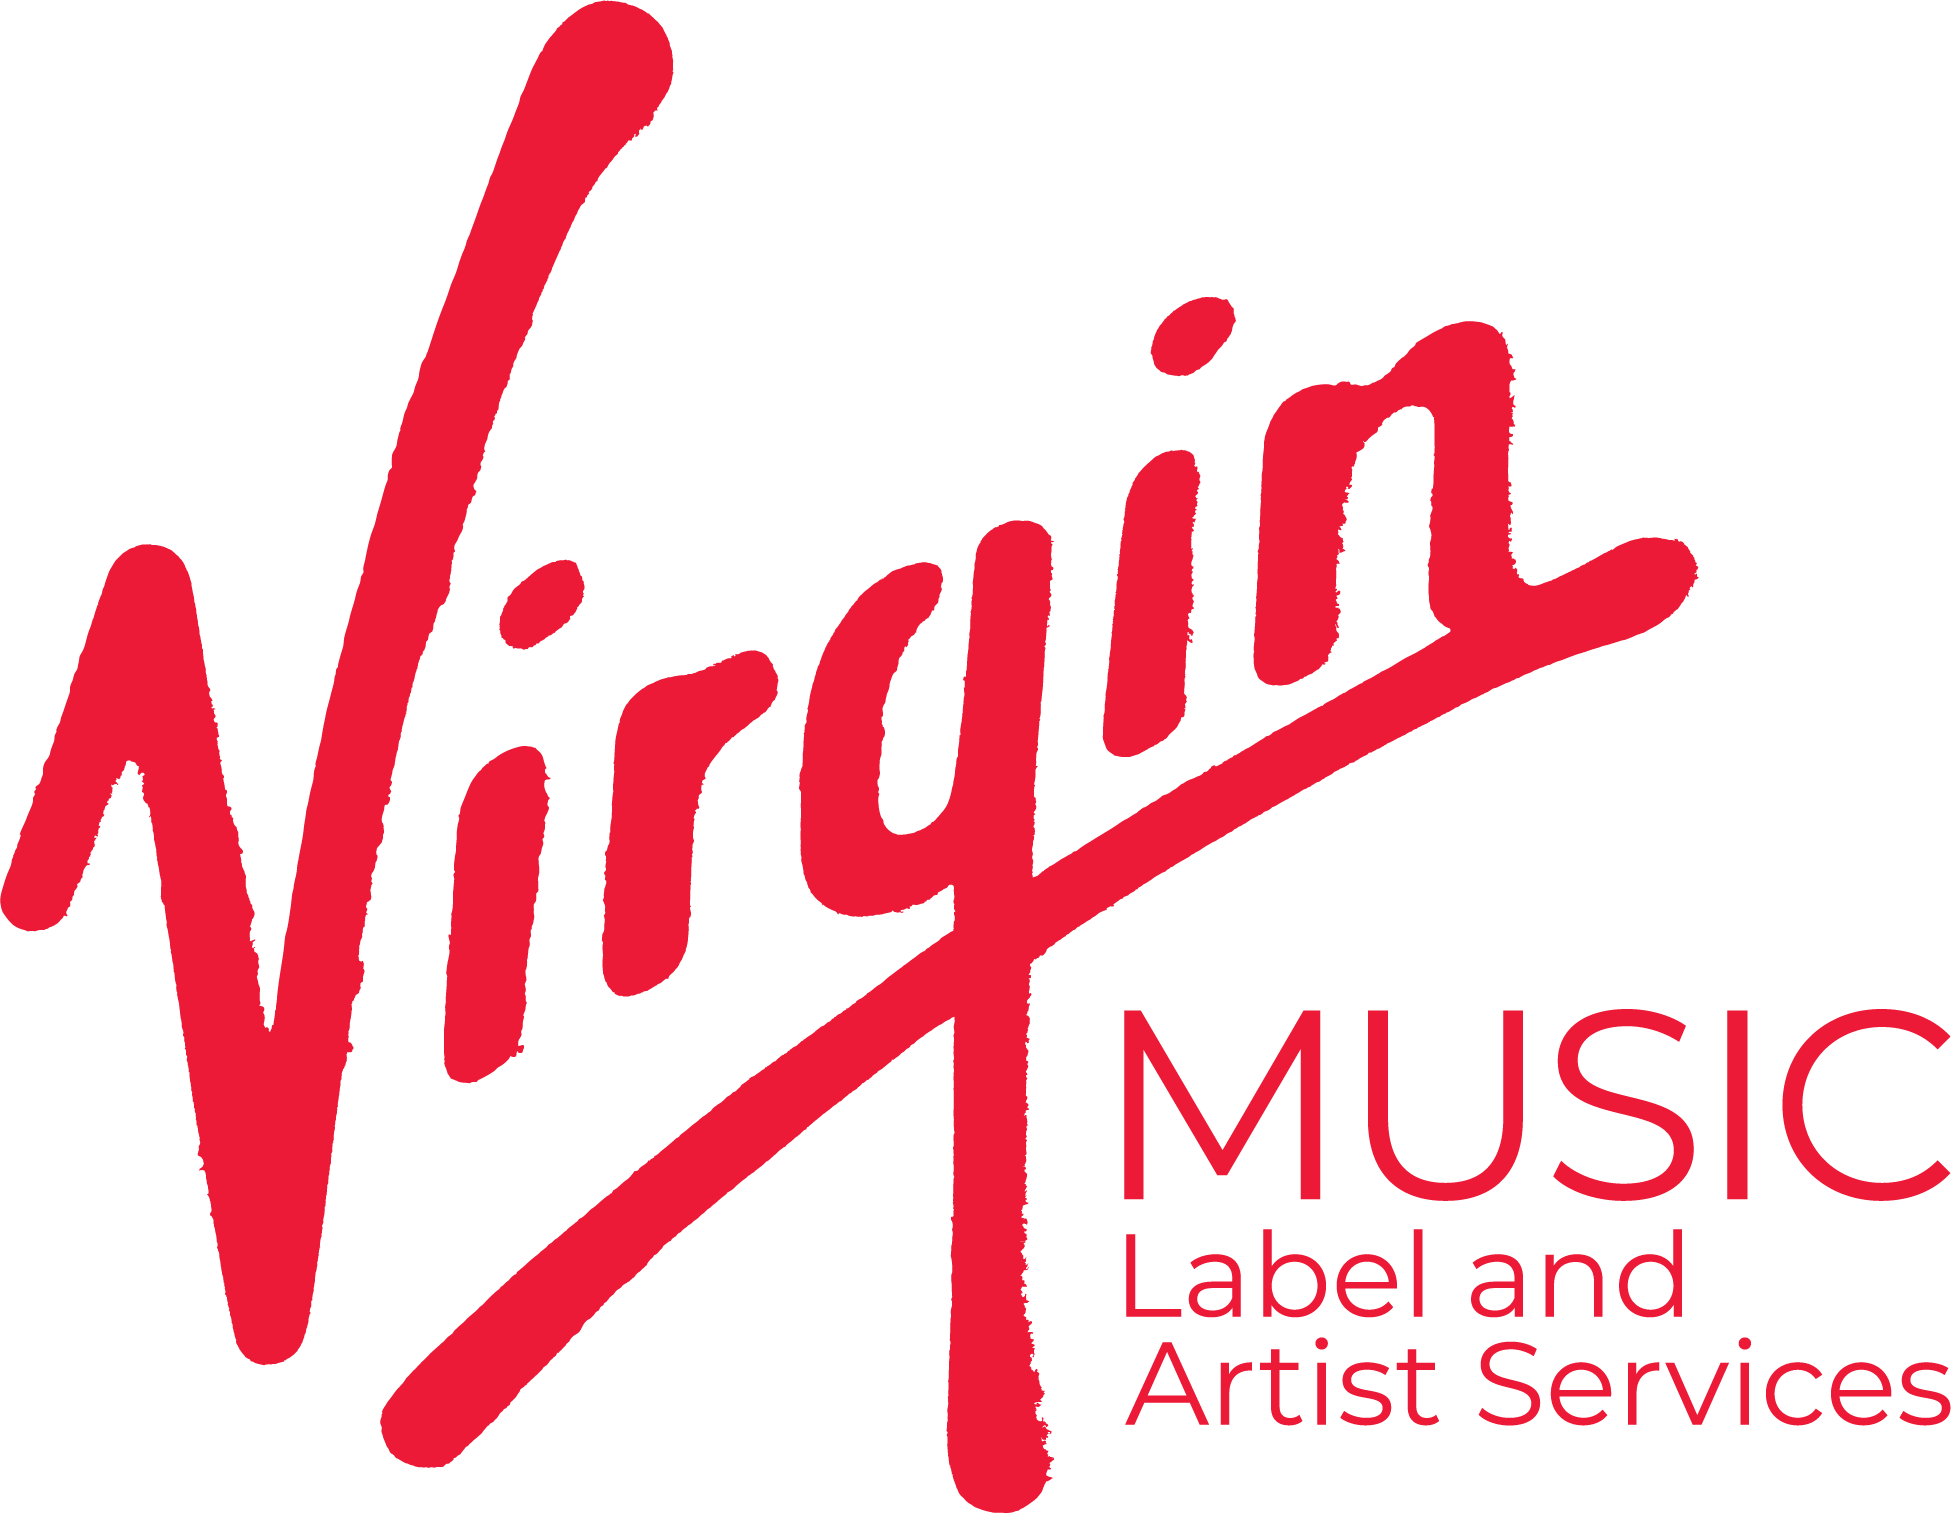 VirginMusic logo